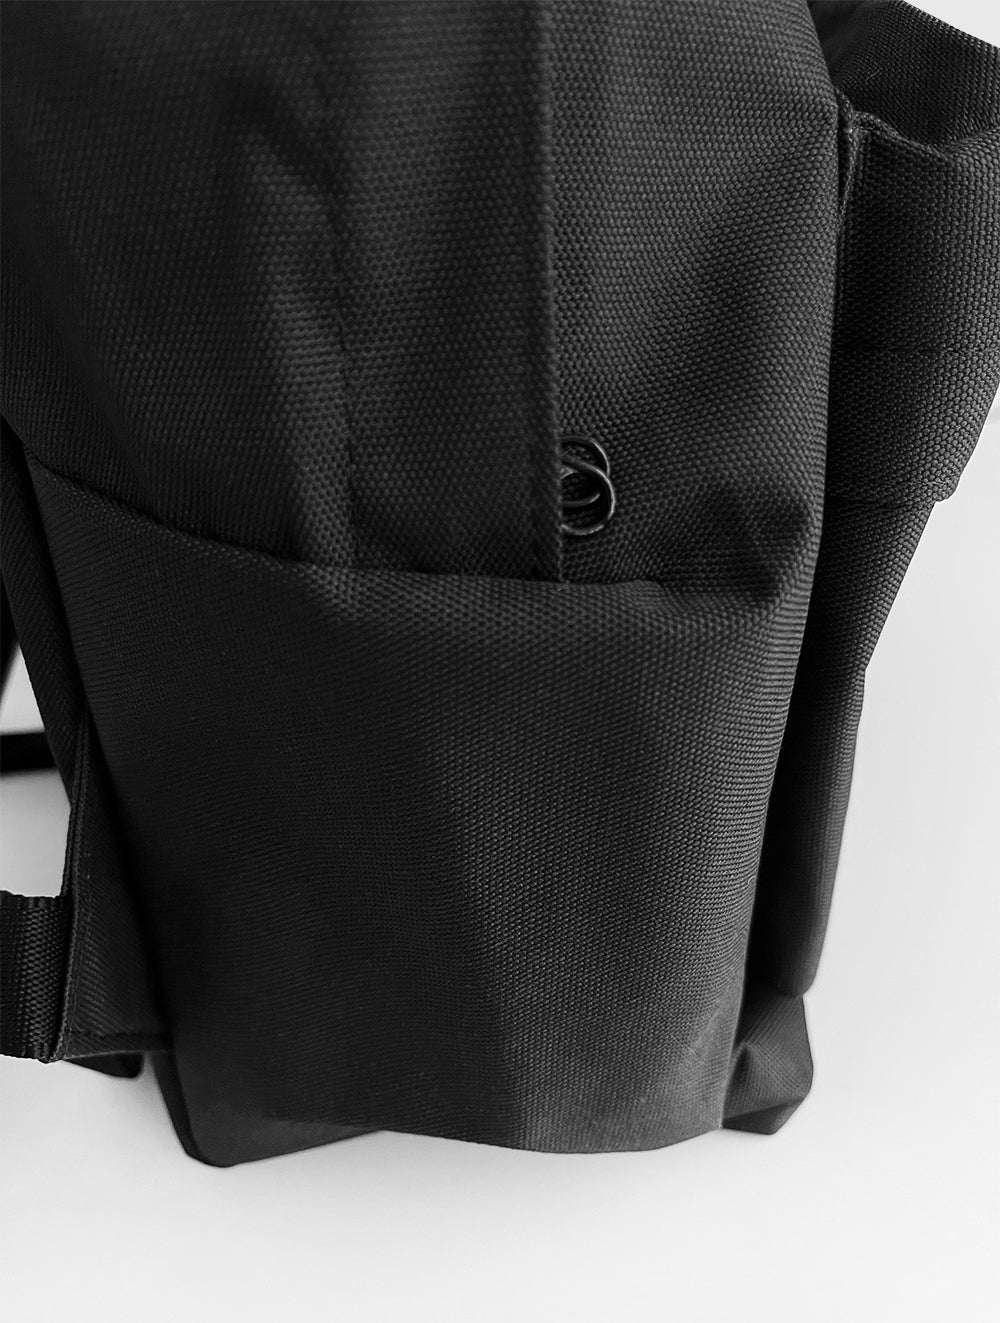 Afternoonlive Classic Backpack (Black)